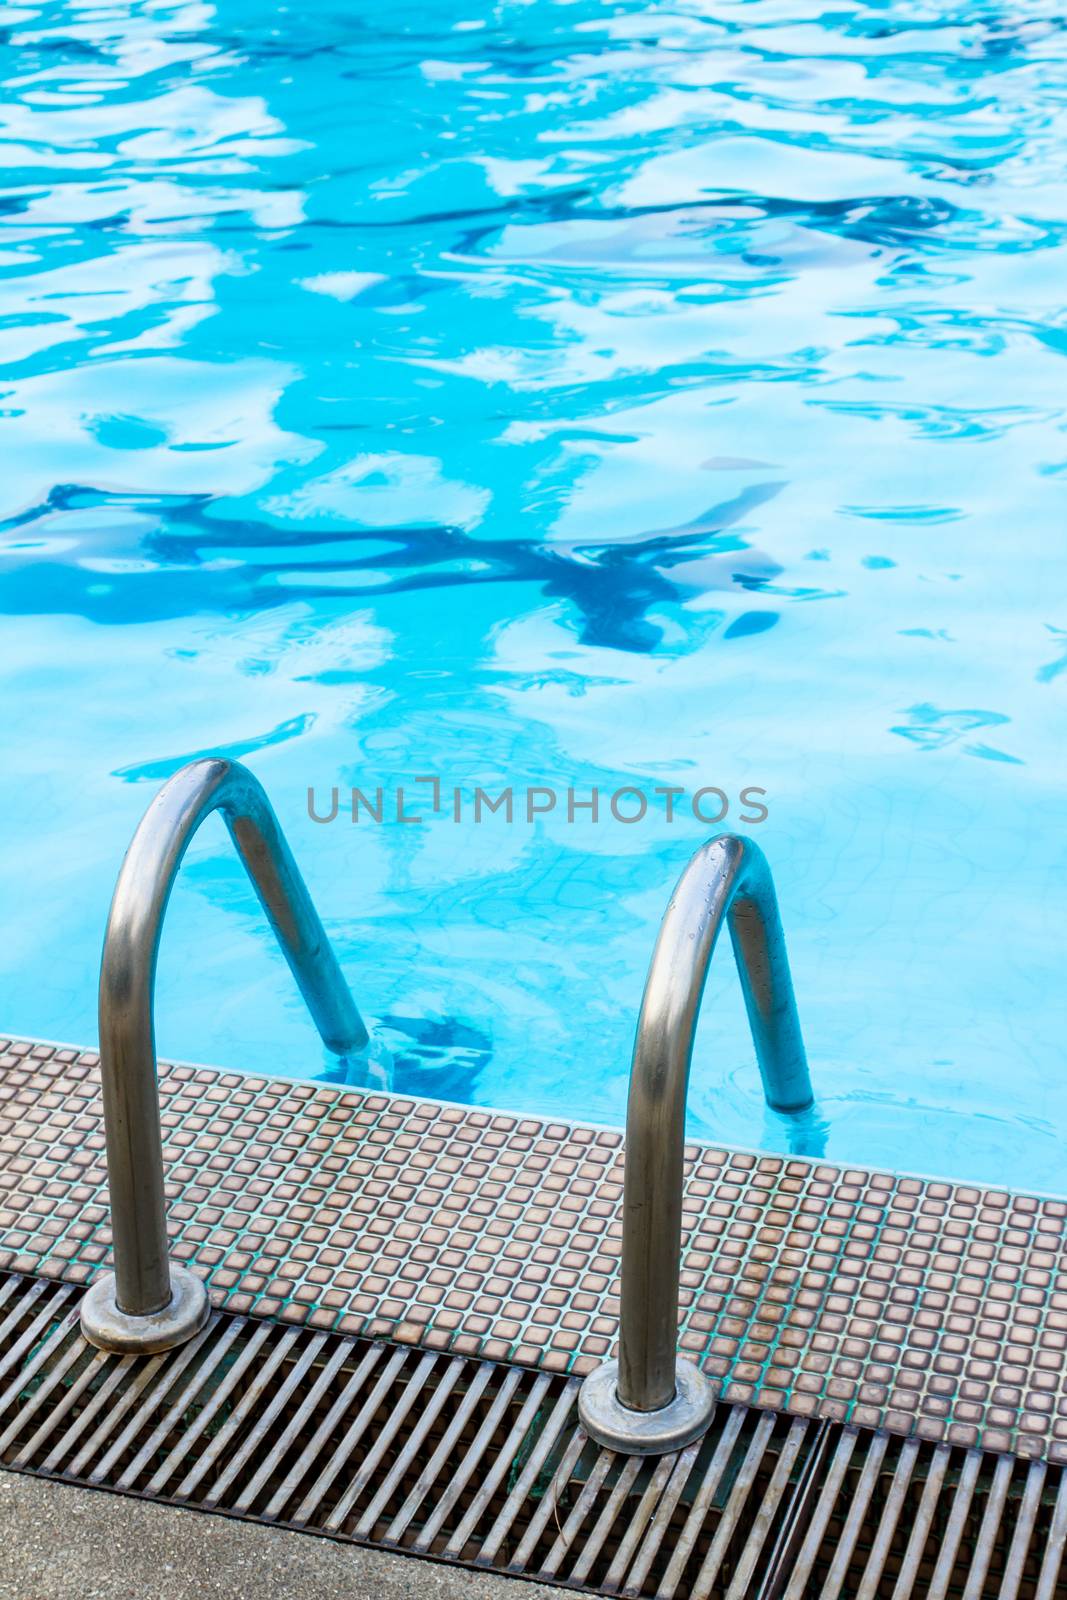 Grab bar steel ladder in swimming pool